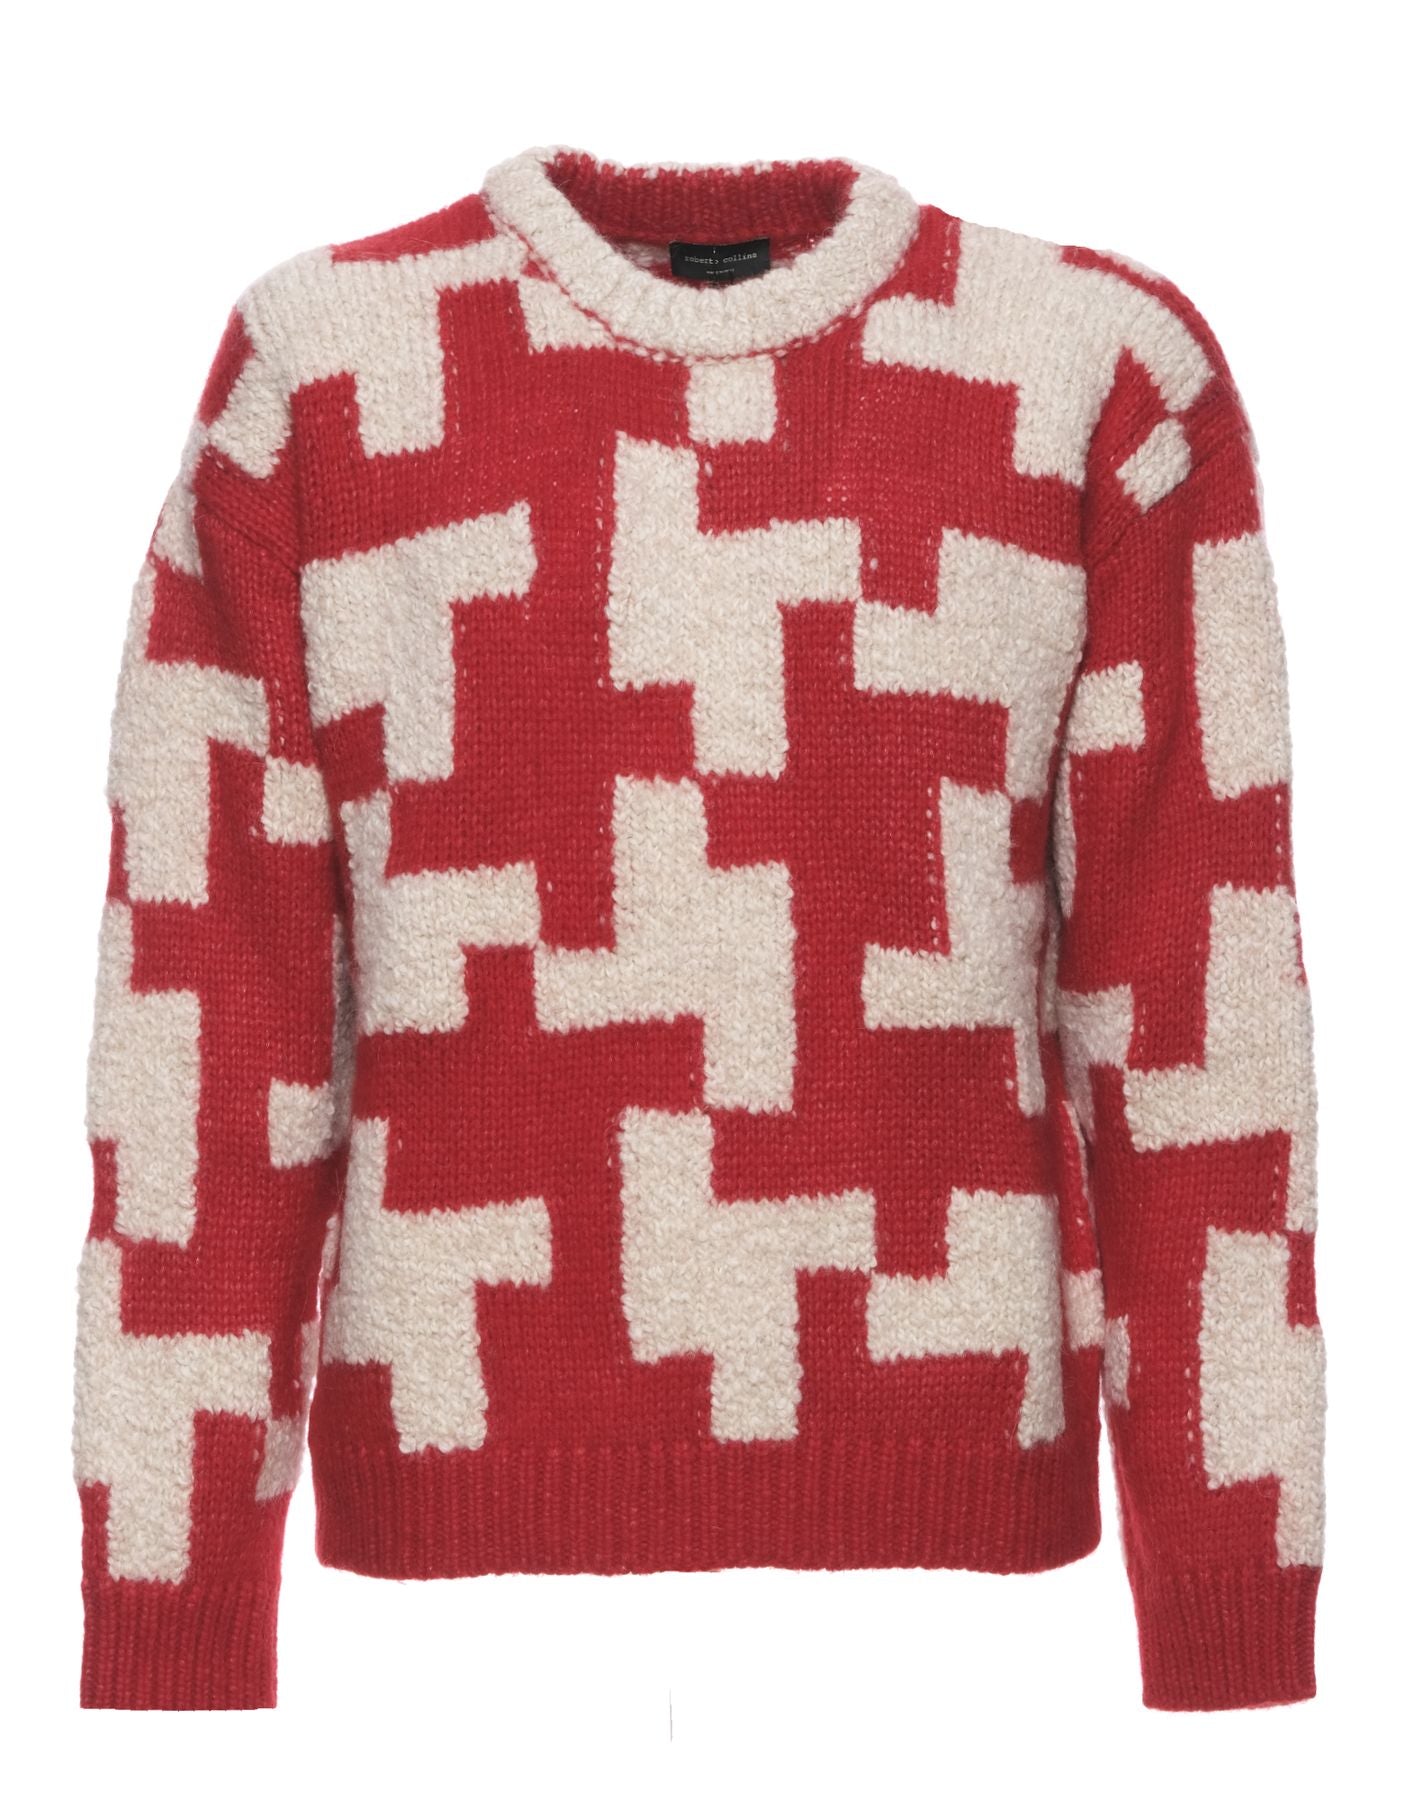 Sweater for men RP46001 38 RED ECRU ROBERTO COLLINA